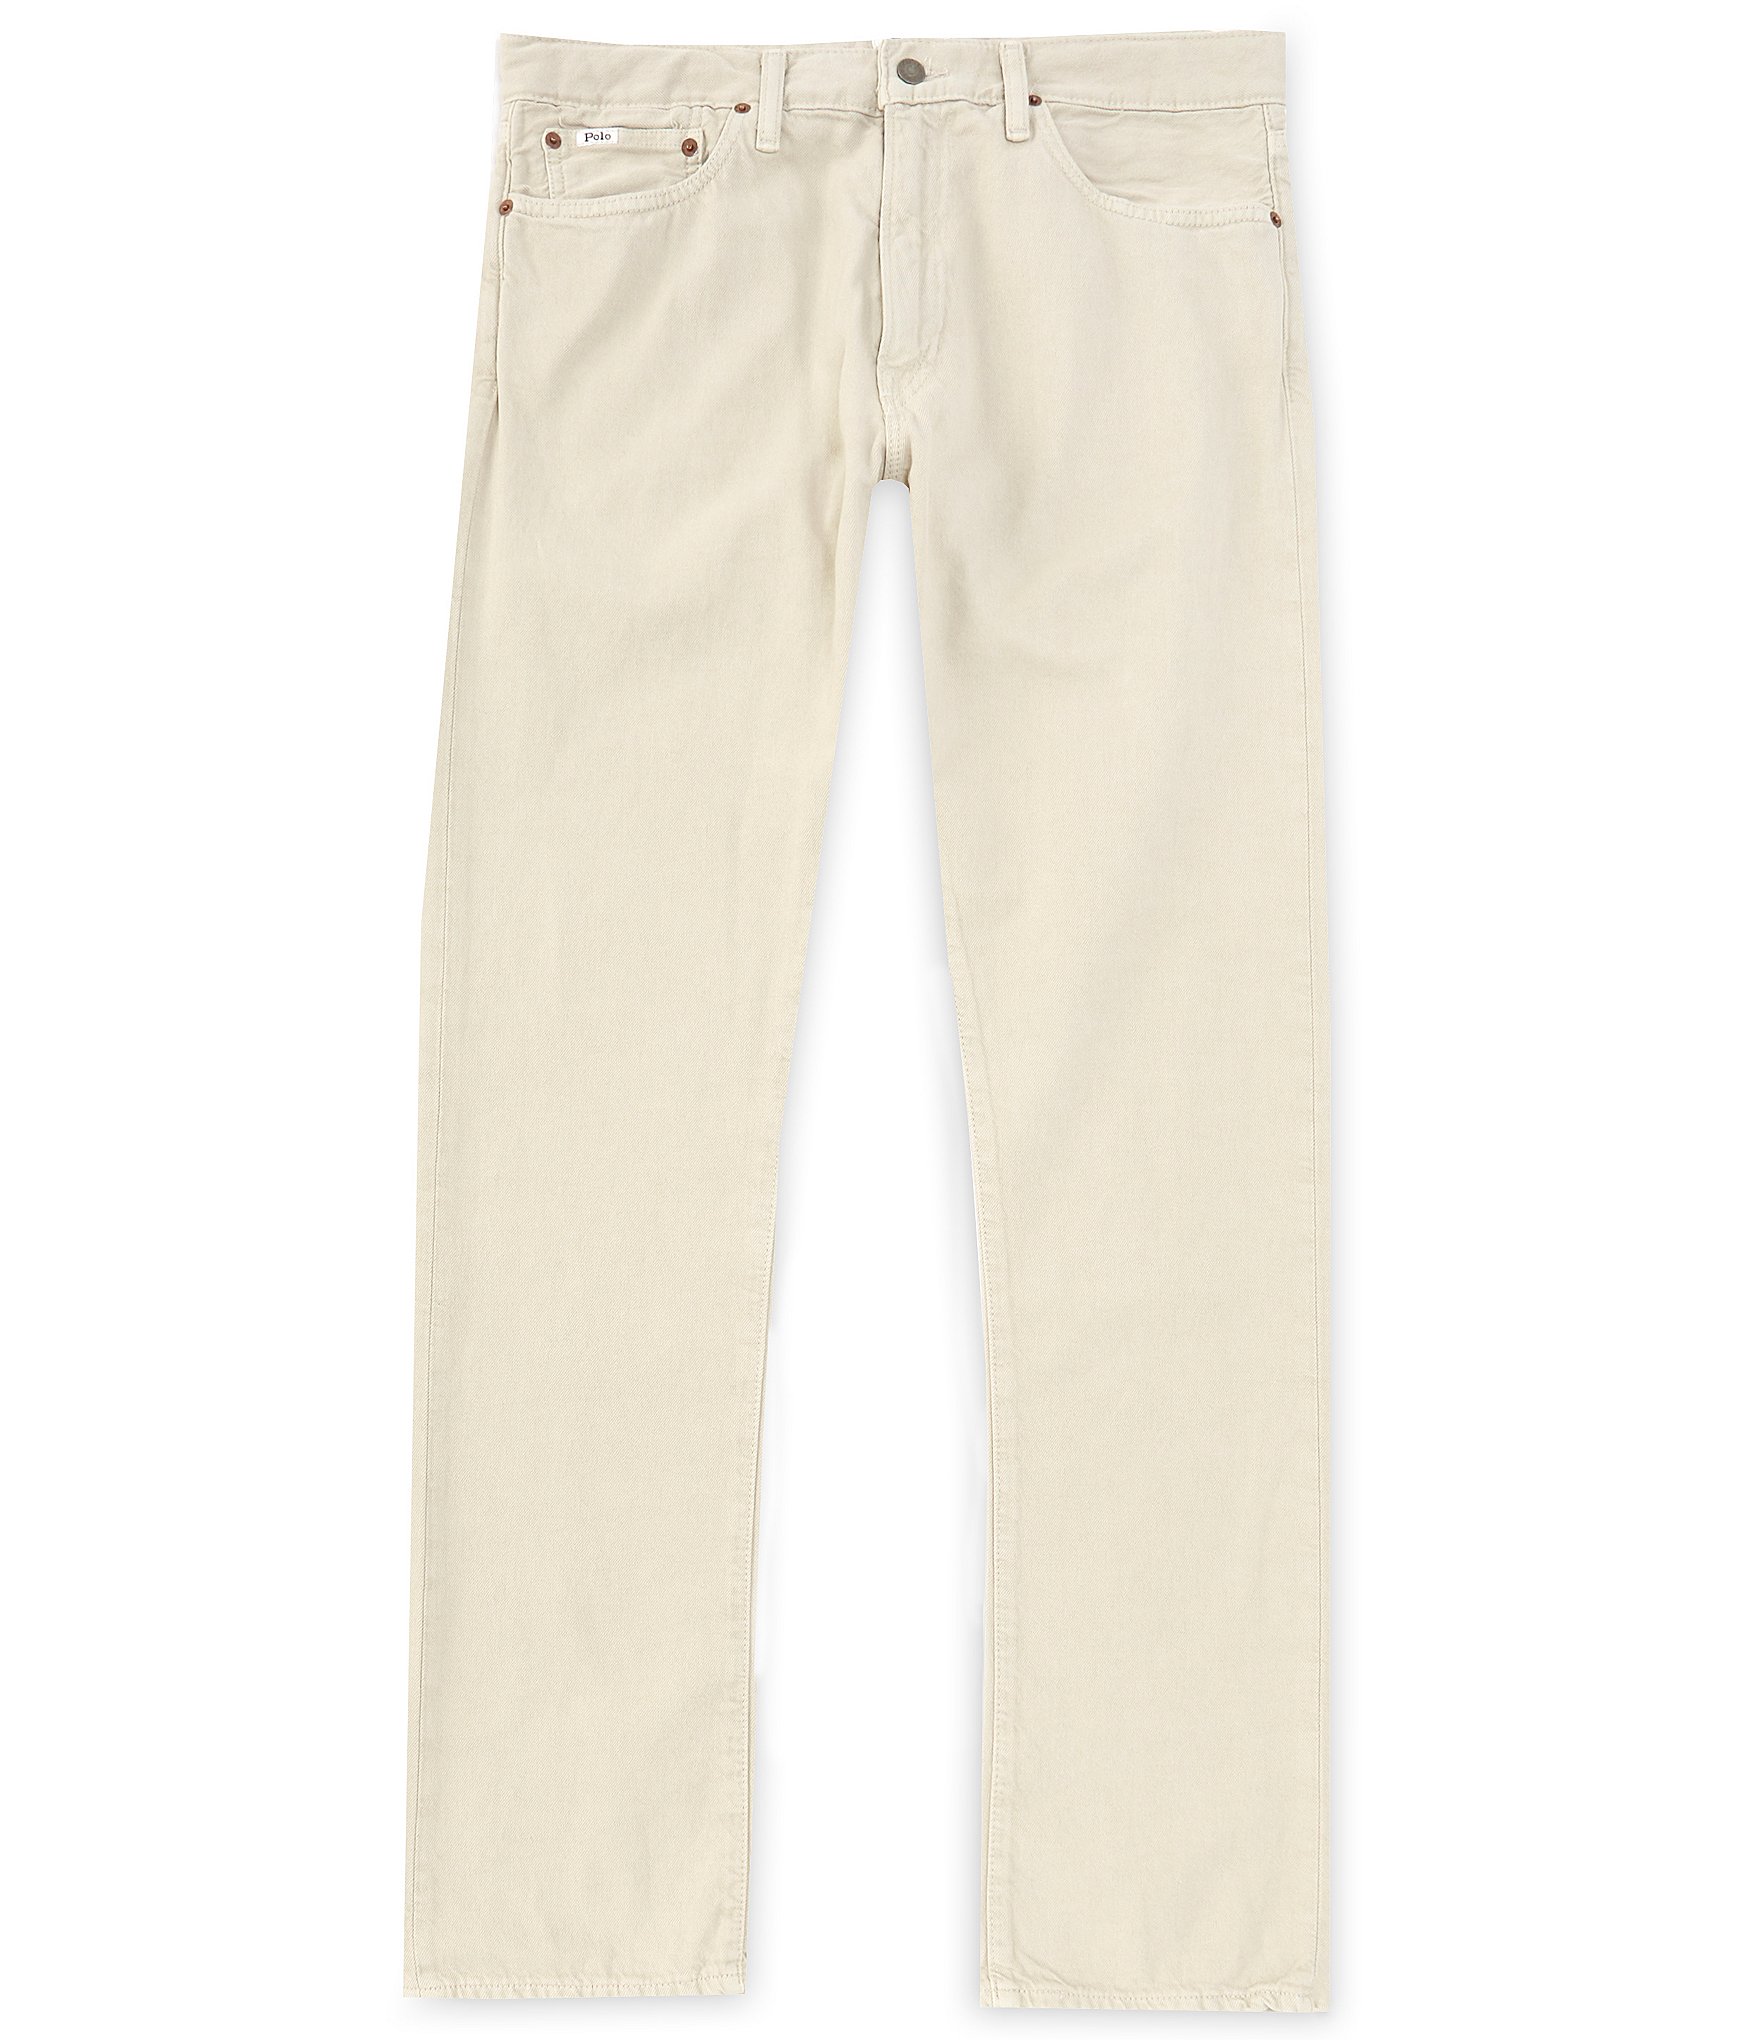 Grey Men's Jeans | Dillard's